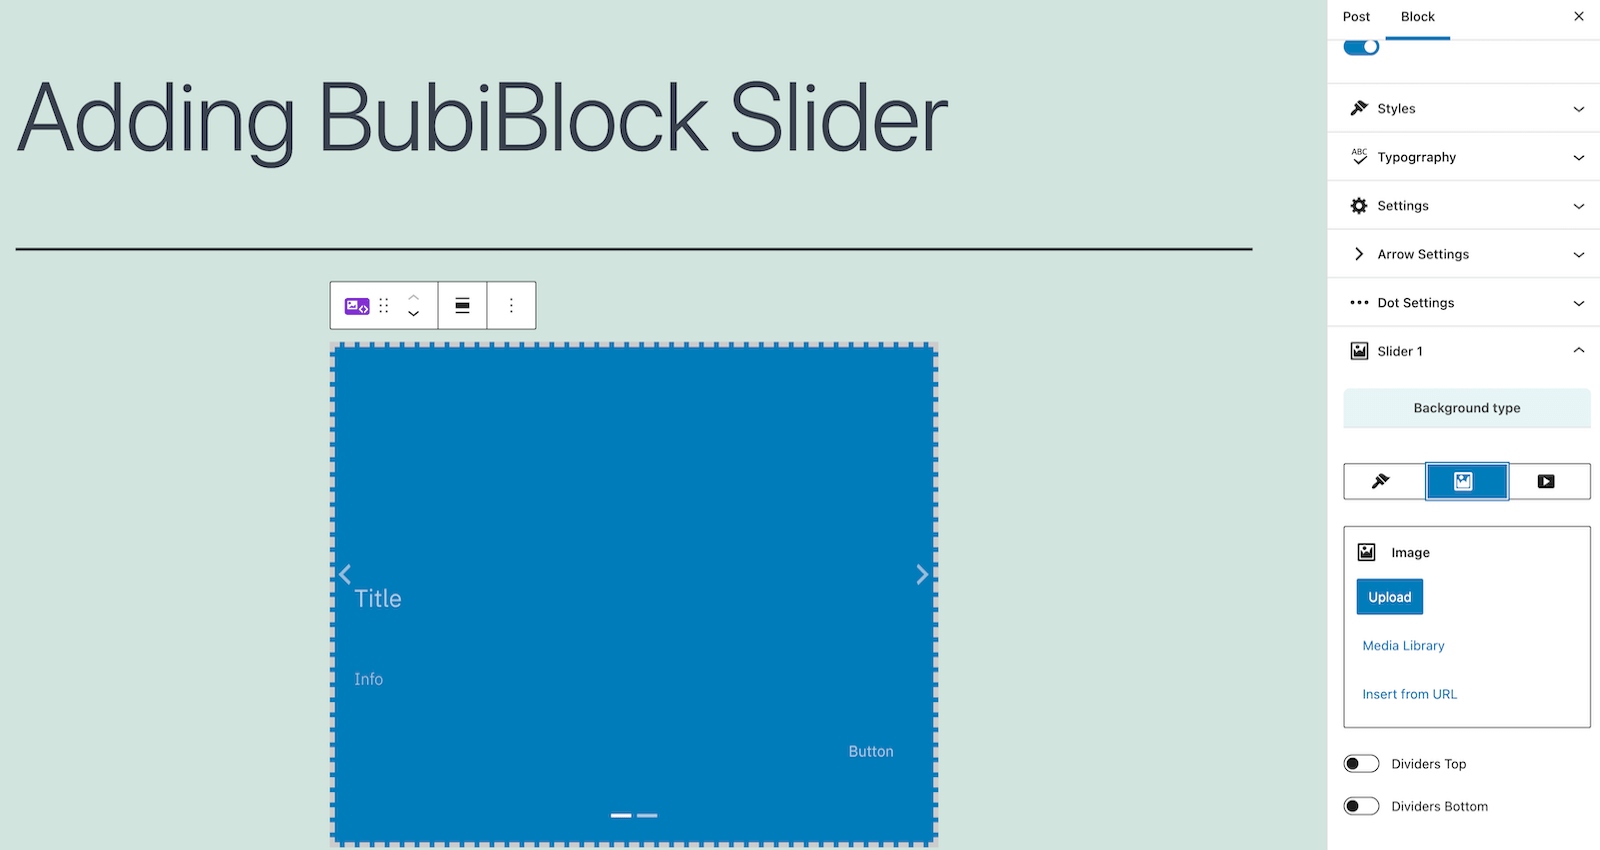 Adding BubiBlock Slider